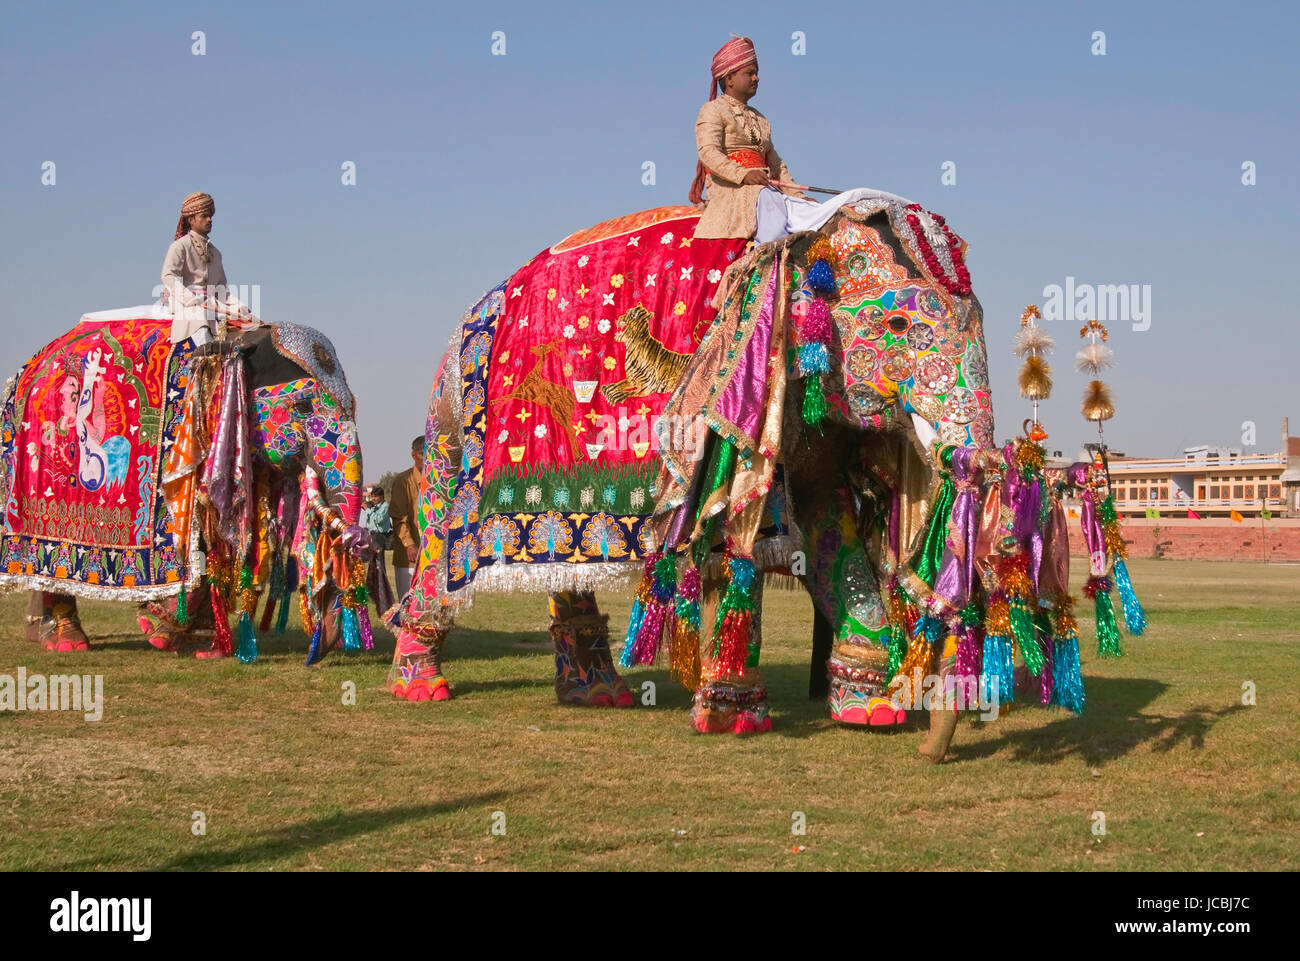 4,246 Welcome Elephant Images, Stock Photos & Vectors | Shutterstock